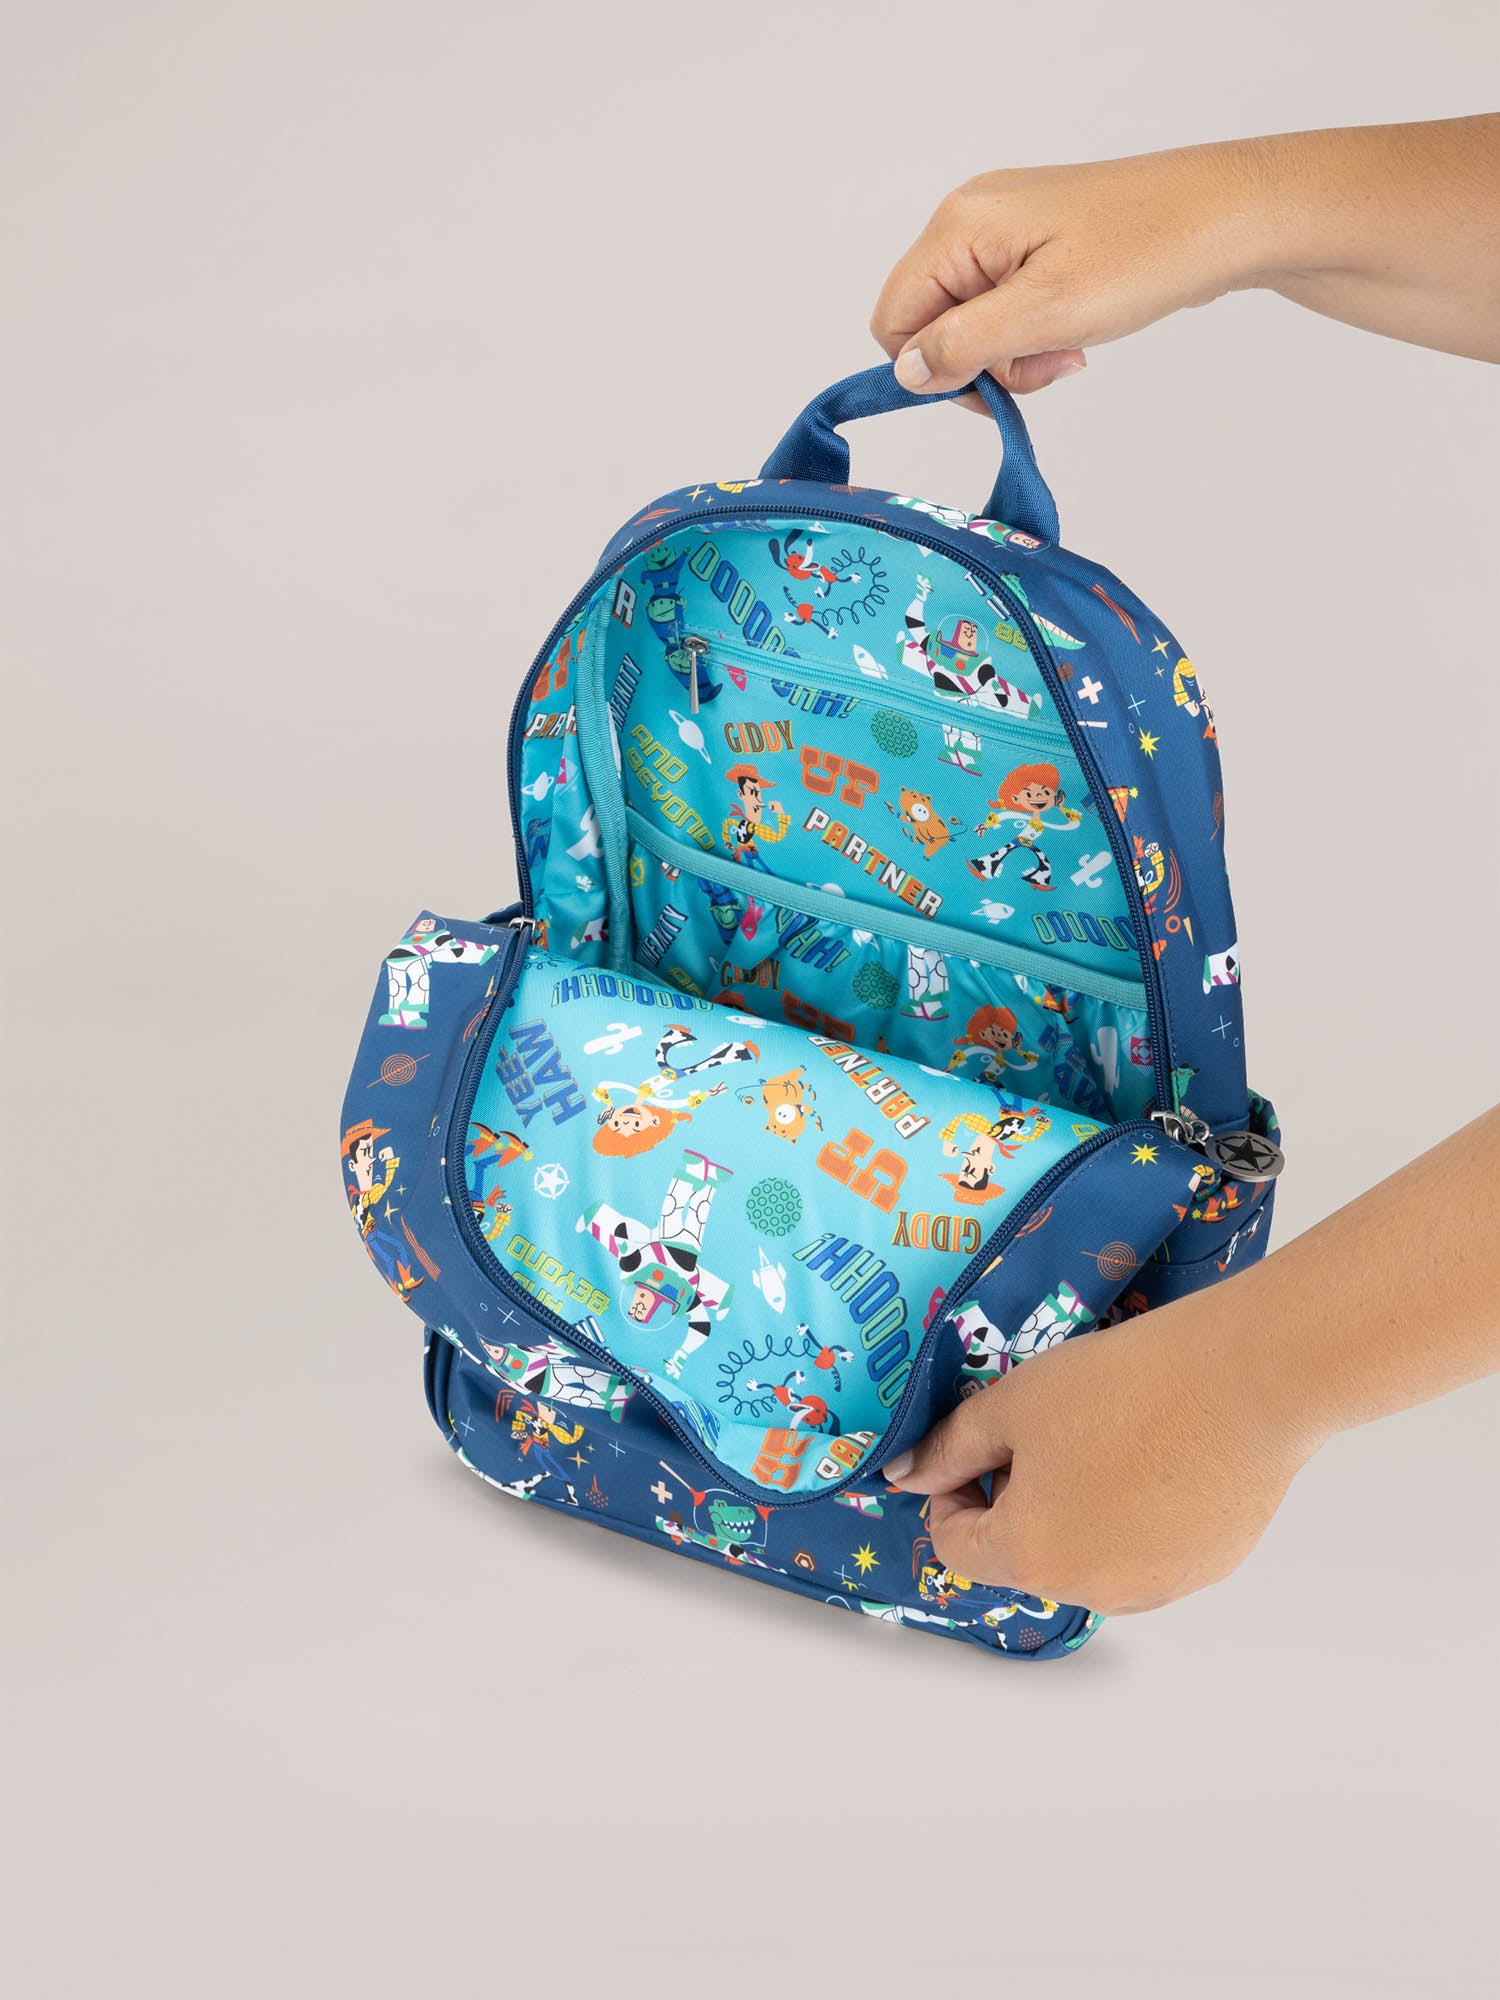 Midi Plus Backpack - Disney and Pixar Toy Story